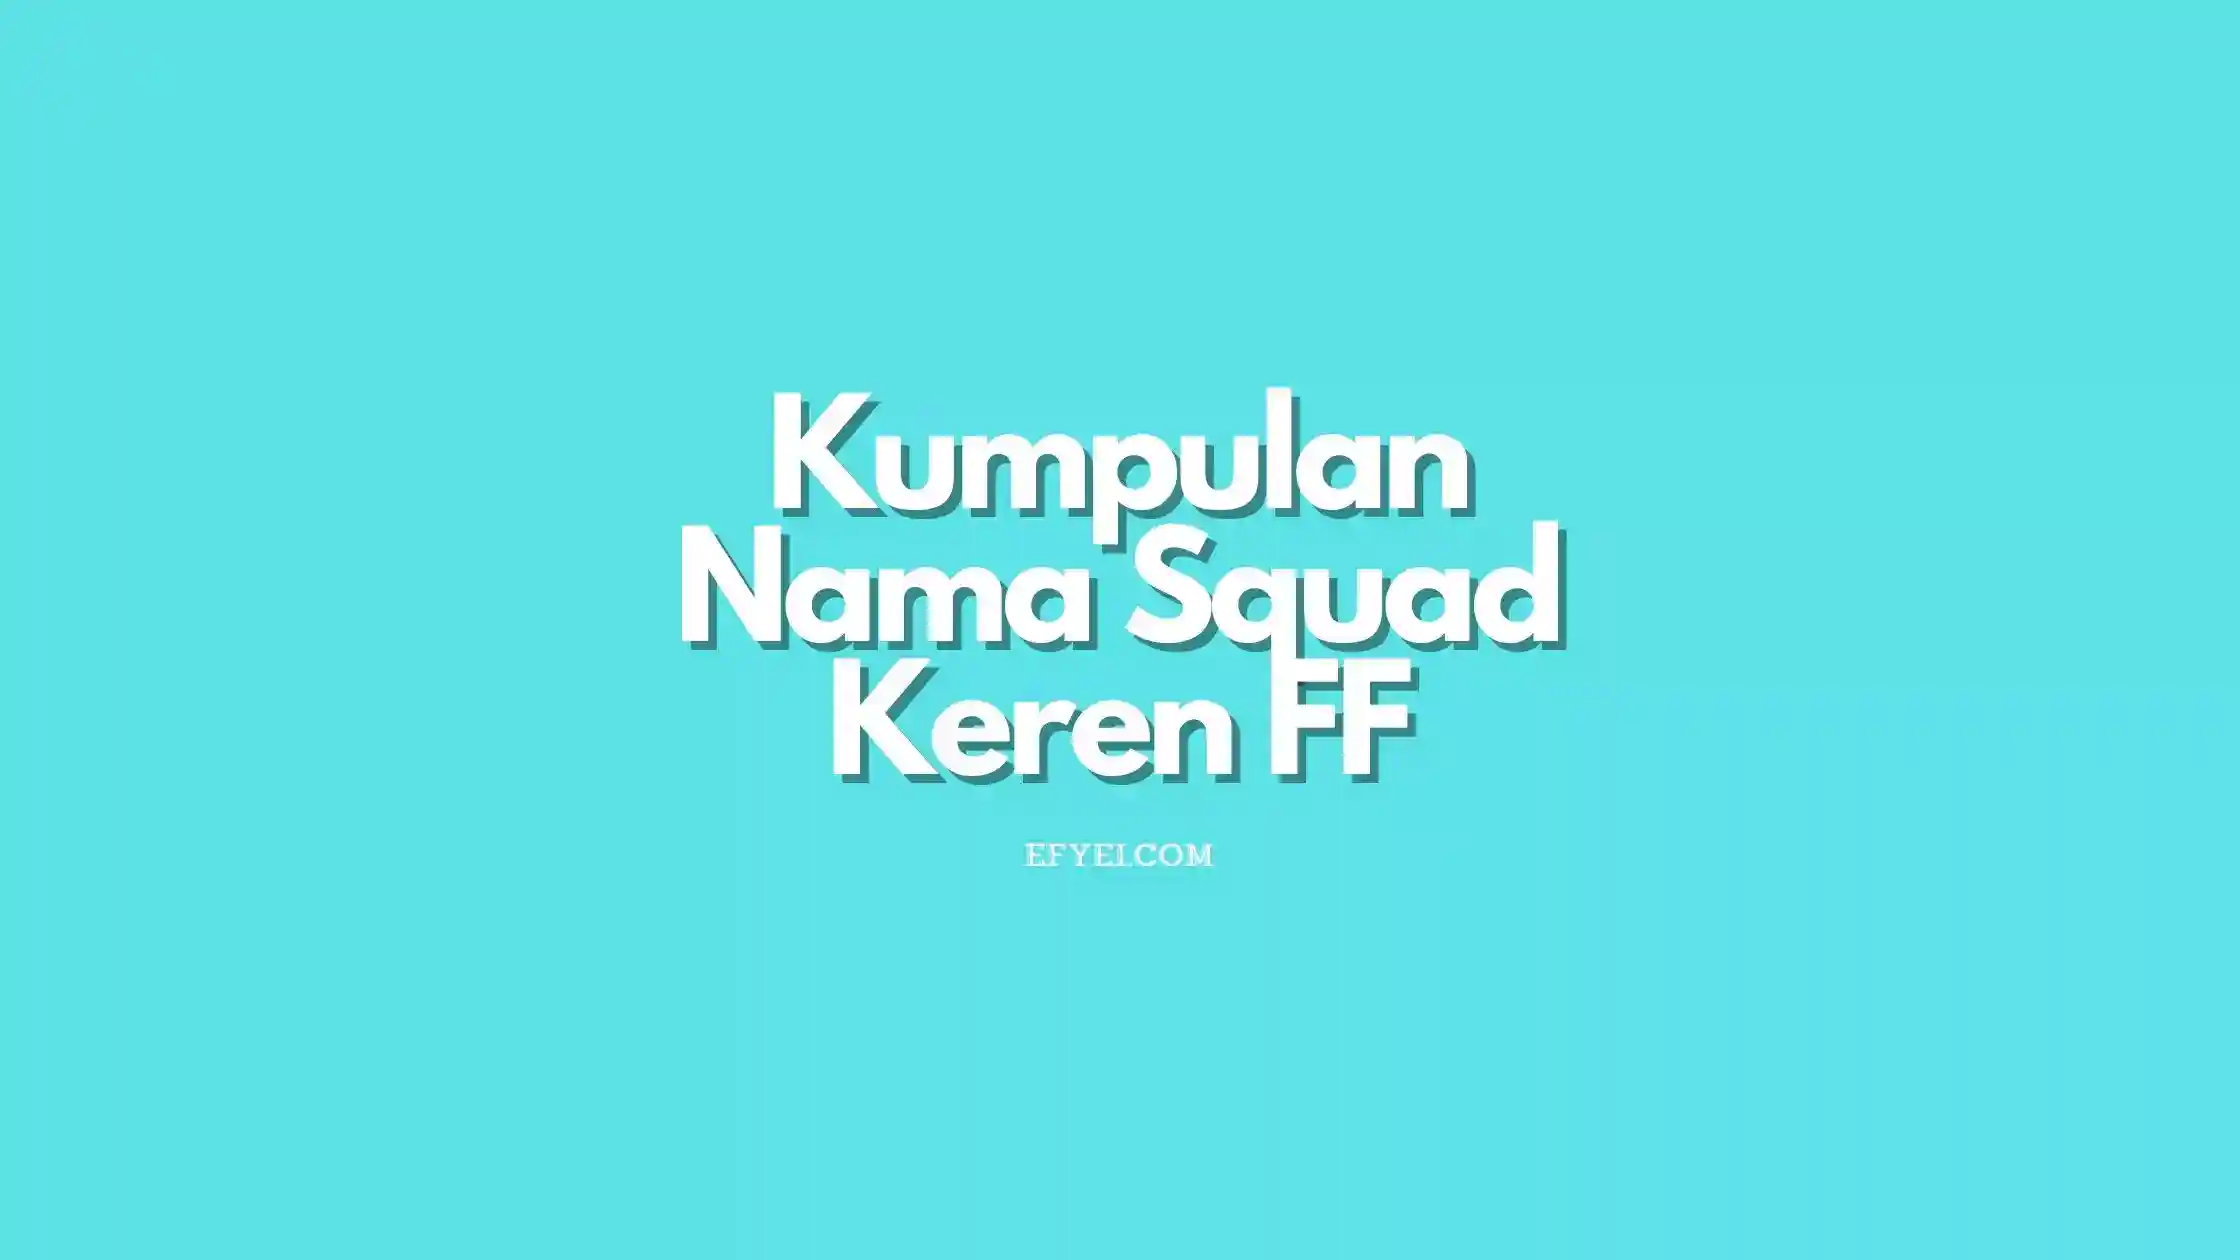 Nama squad keren FF